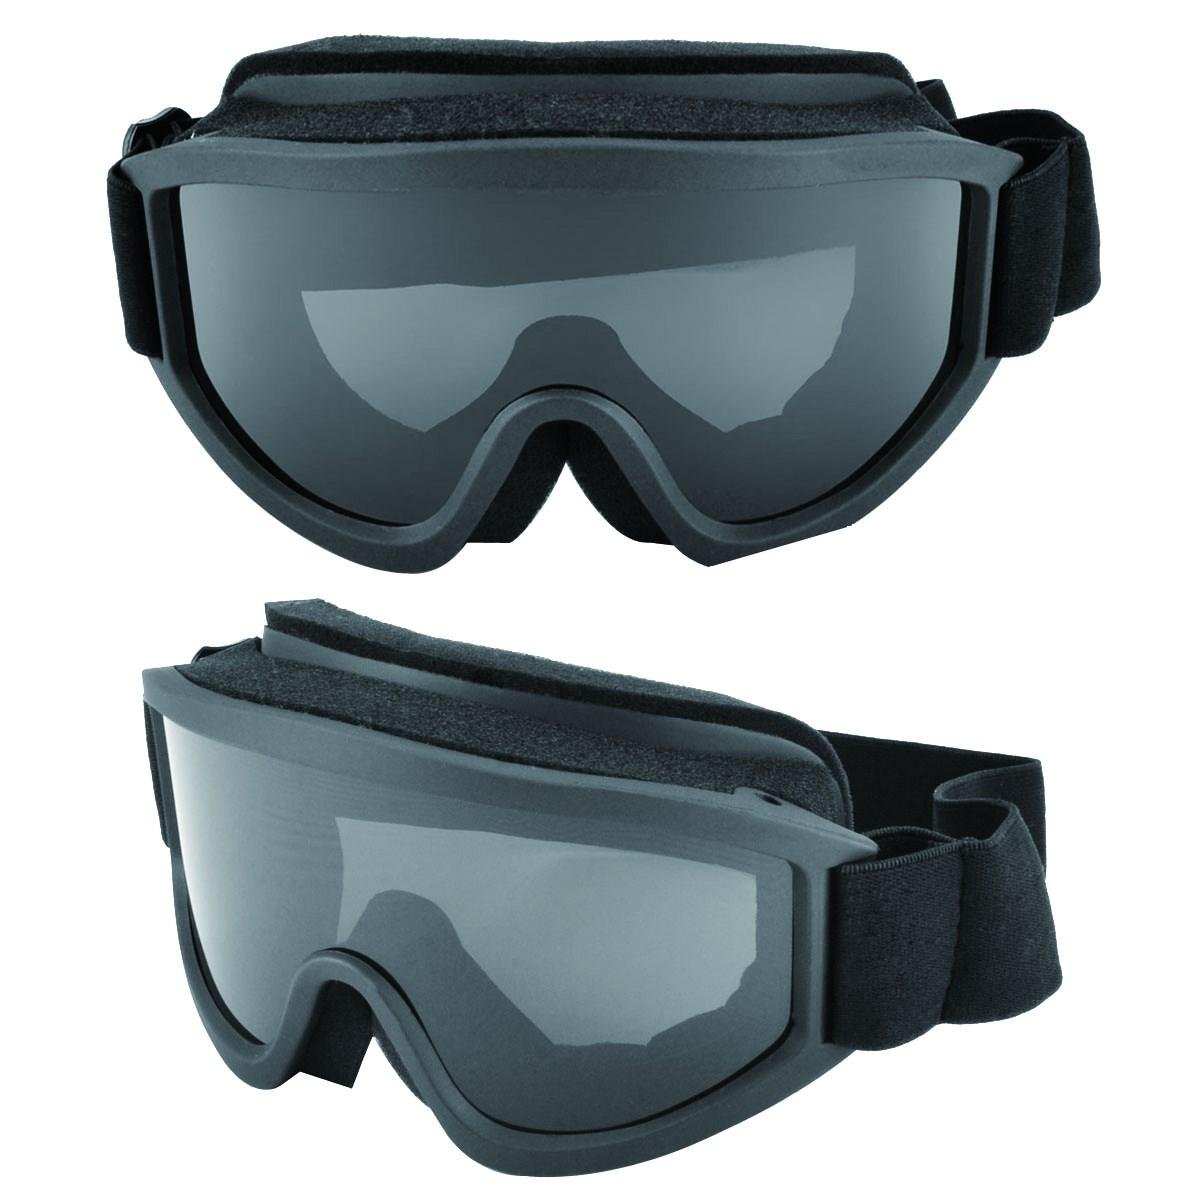 Kelin 1061 Safety Goggles